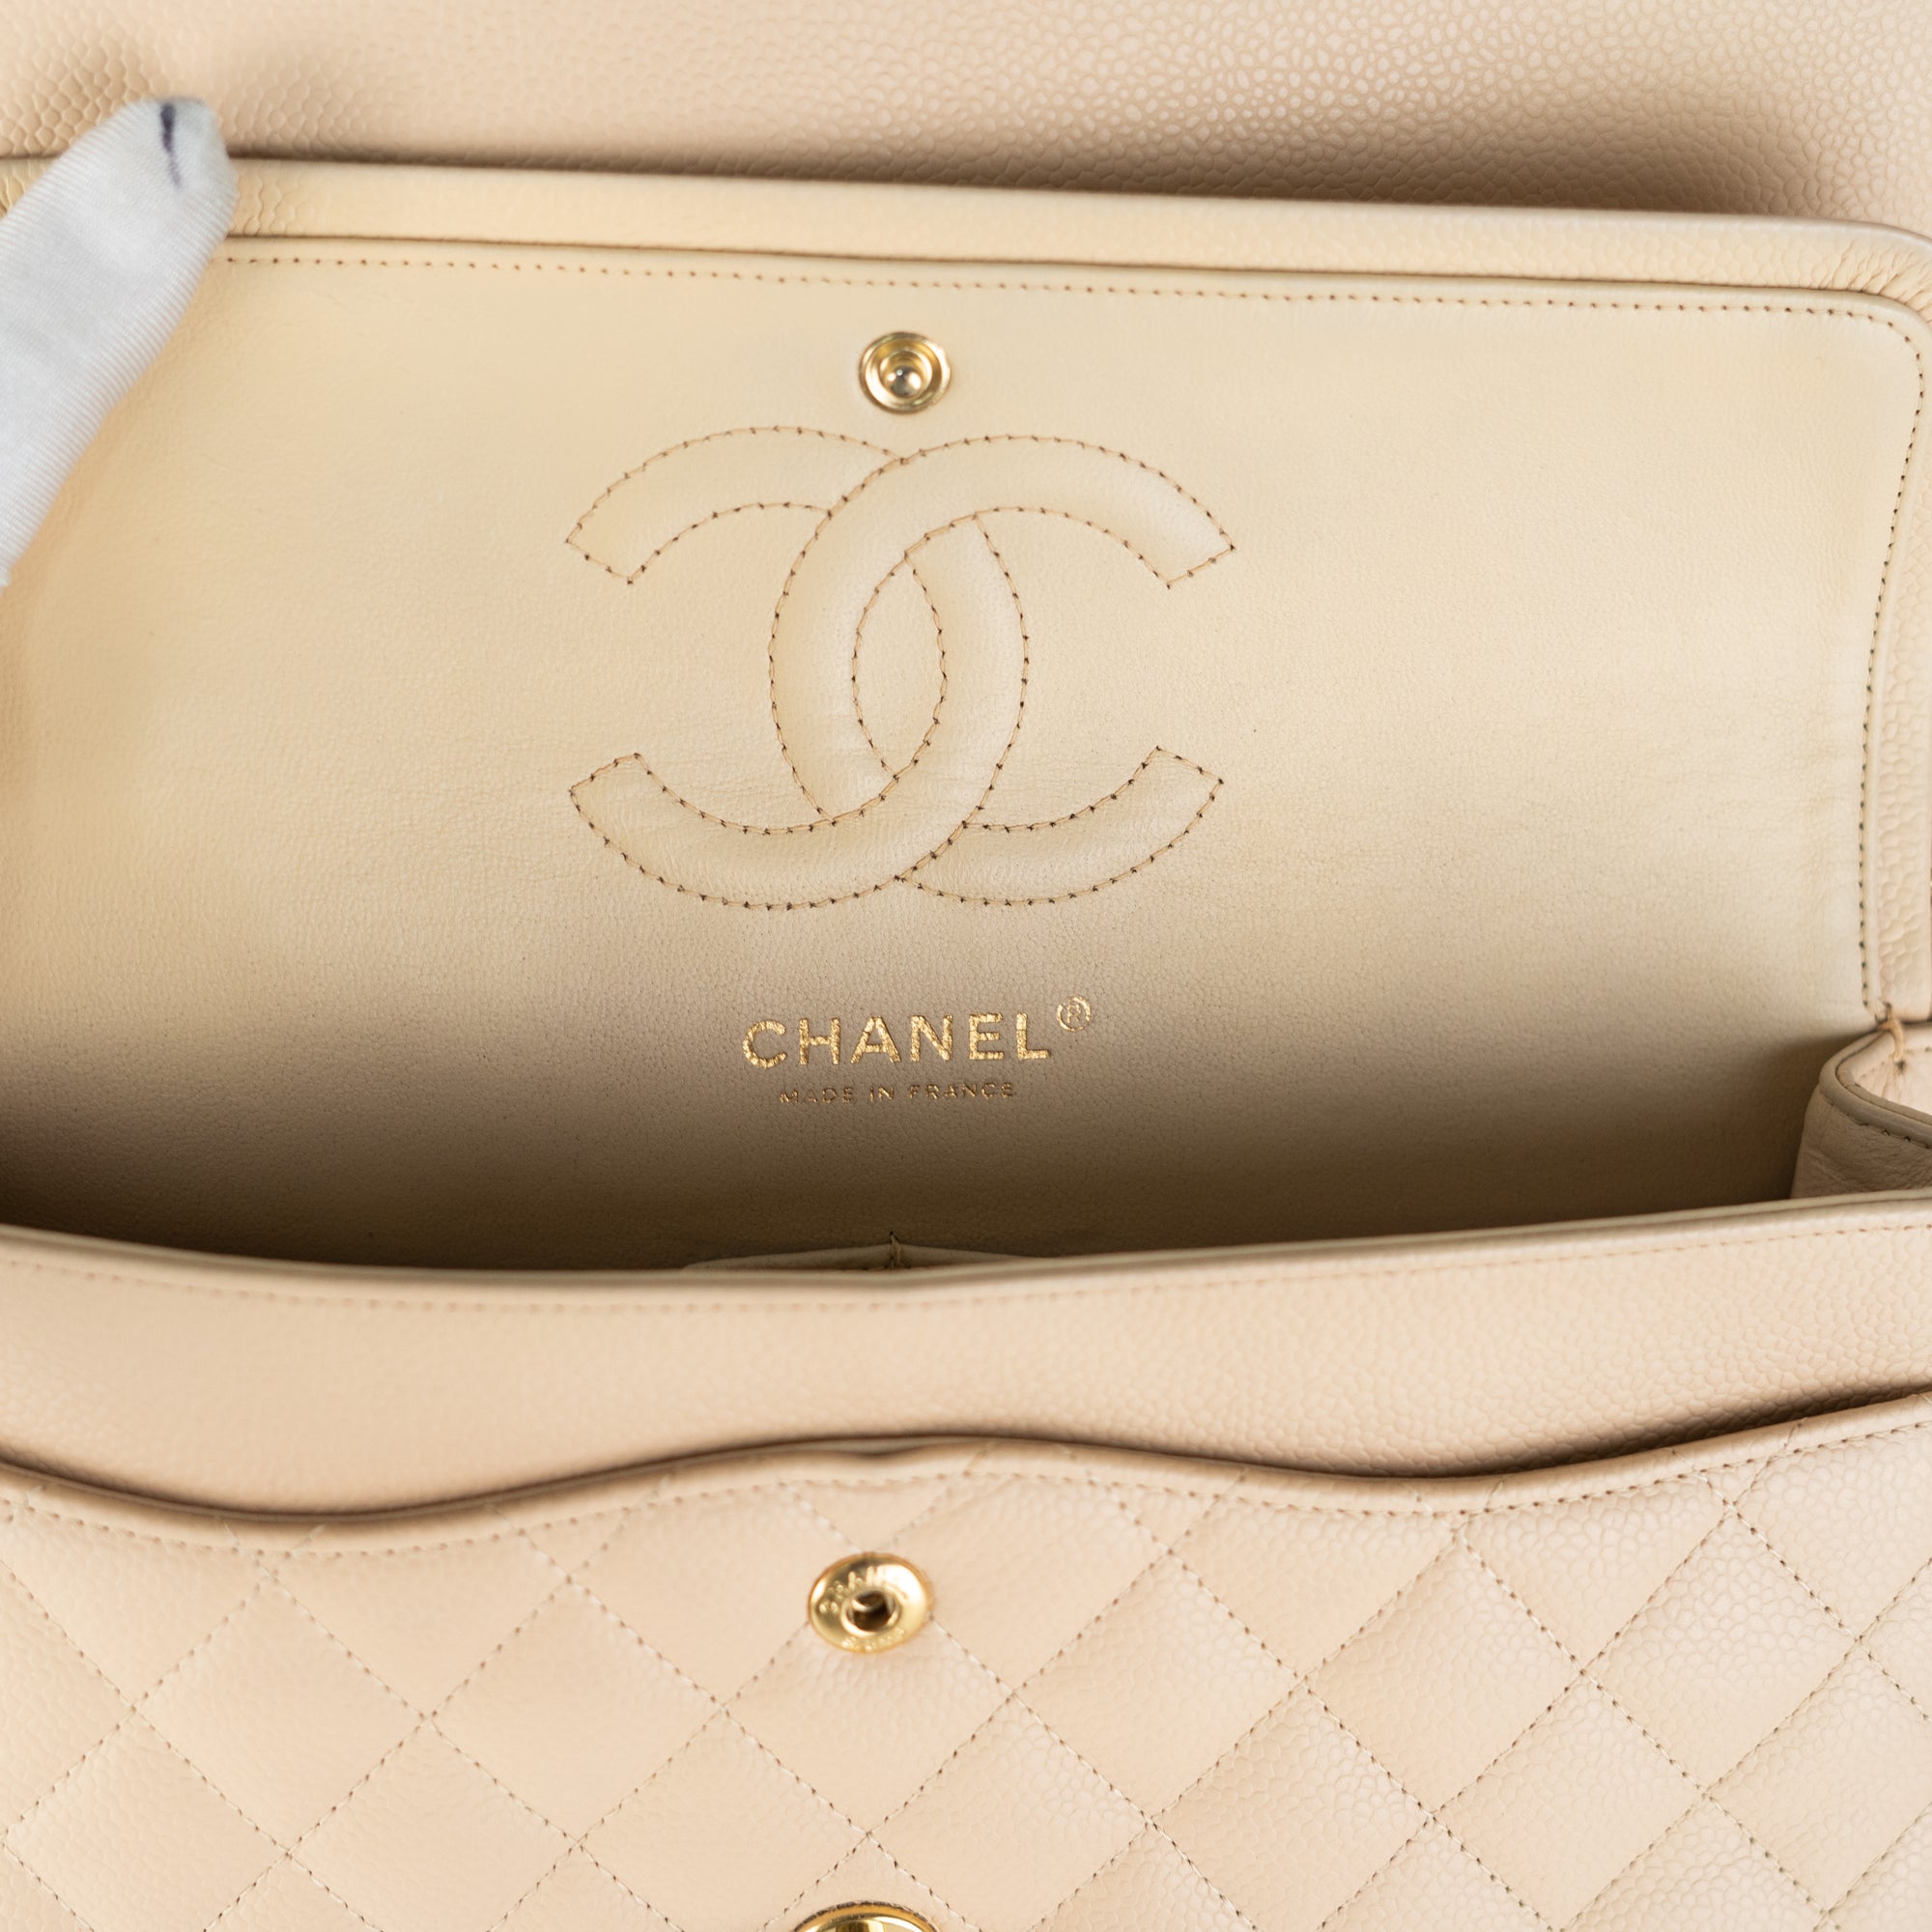 Chanel Classic Medium Large Double Flap Bag Beige - THE PURSE AFFAIR